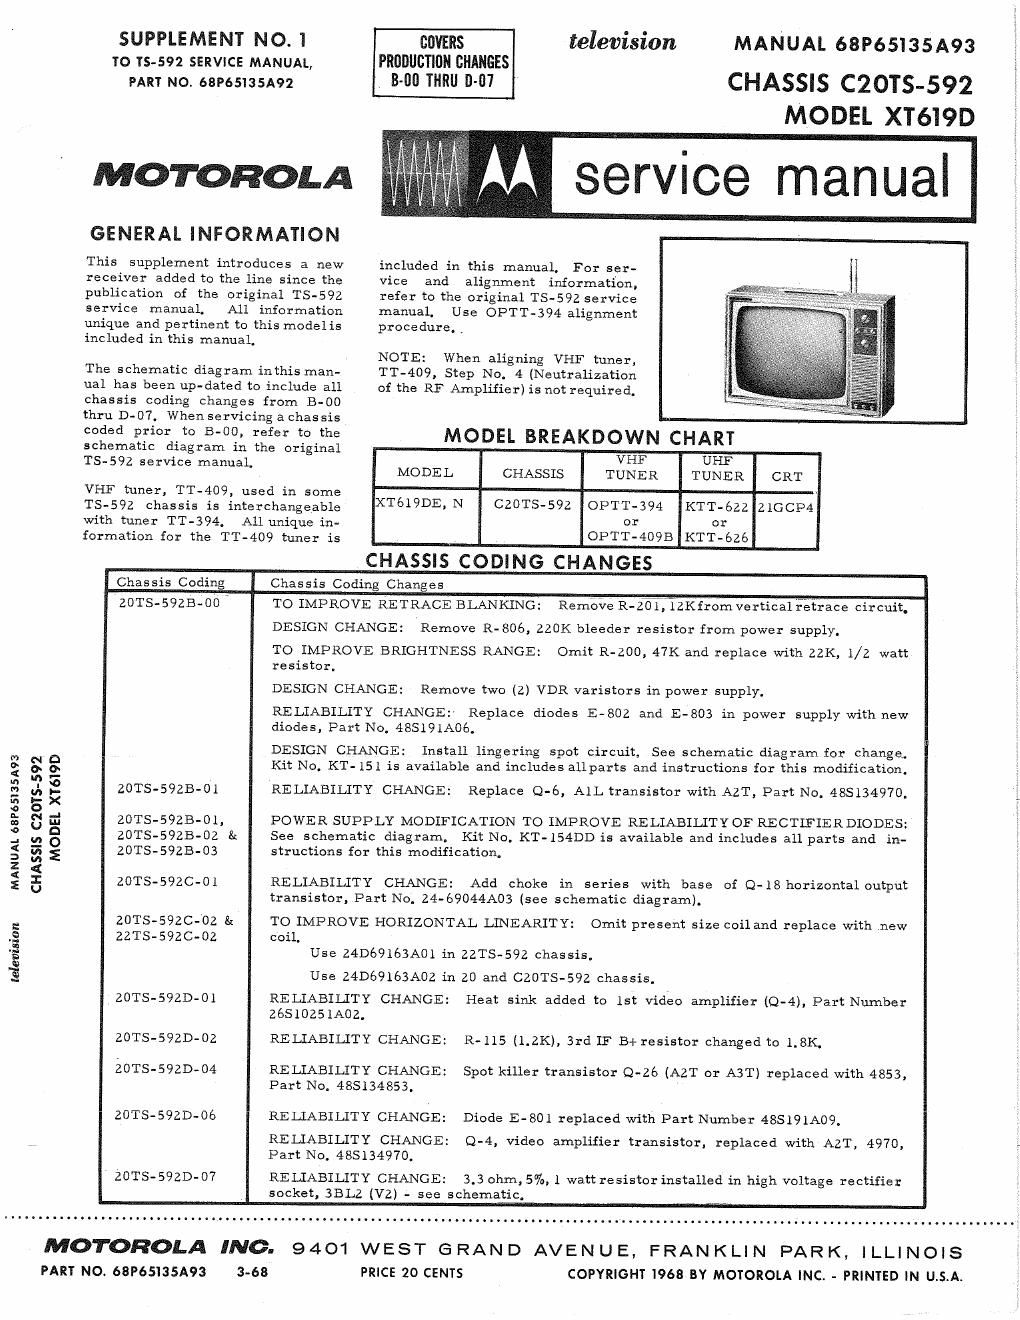 motorola xt 619 d service manual